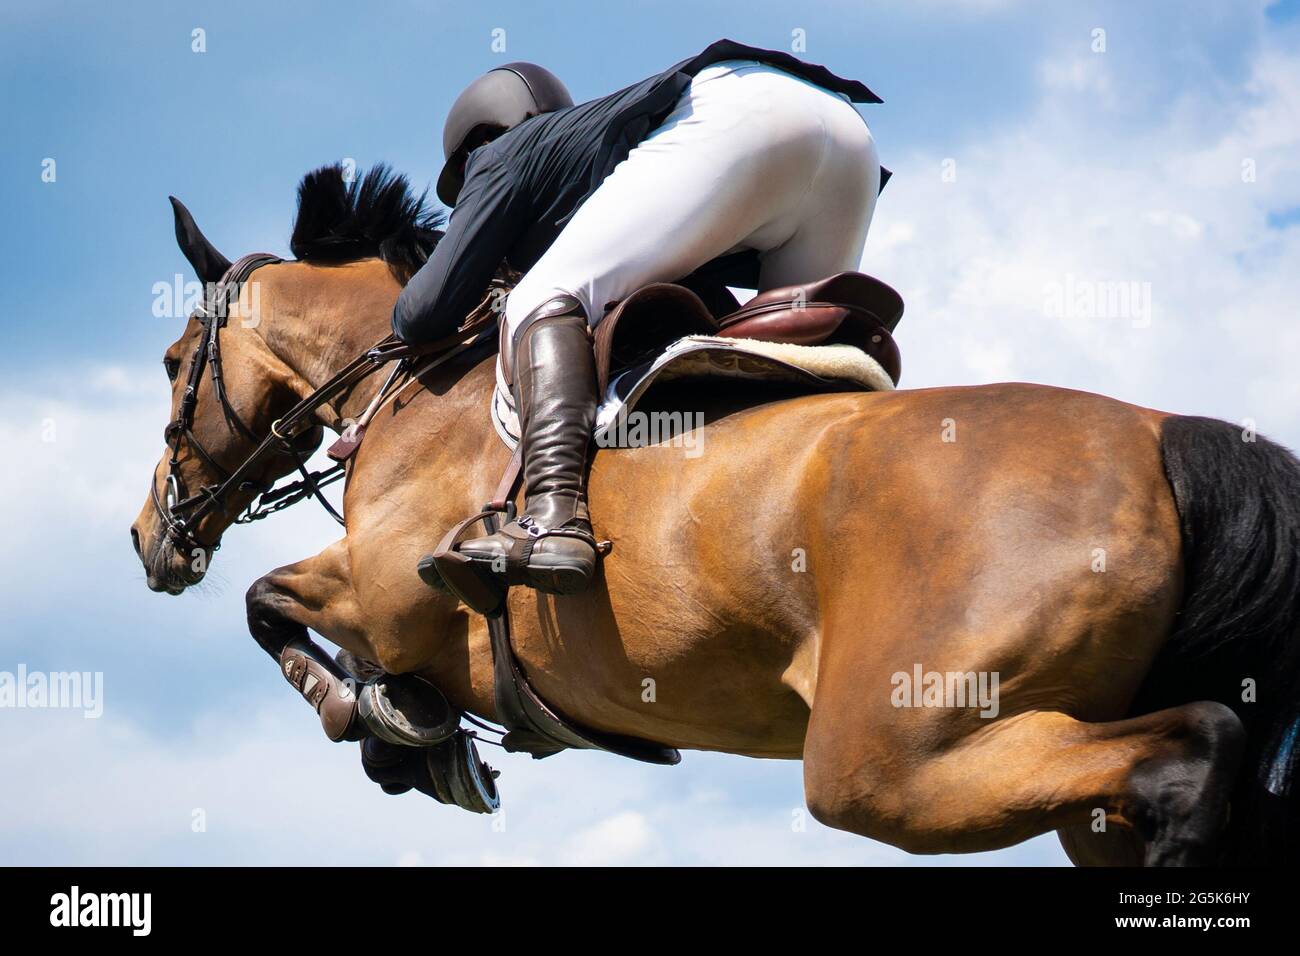 Pferdesport Foto-Themen: Springen, Show Jumping, Reiten. Stockfoto